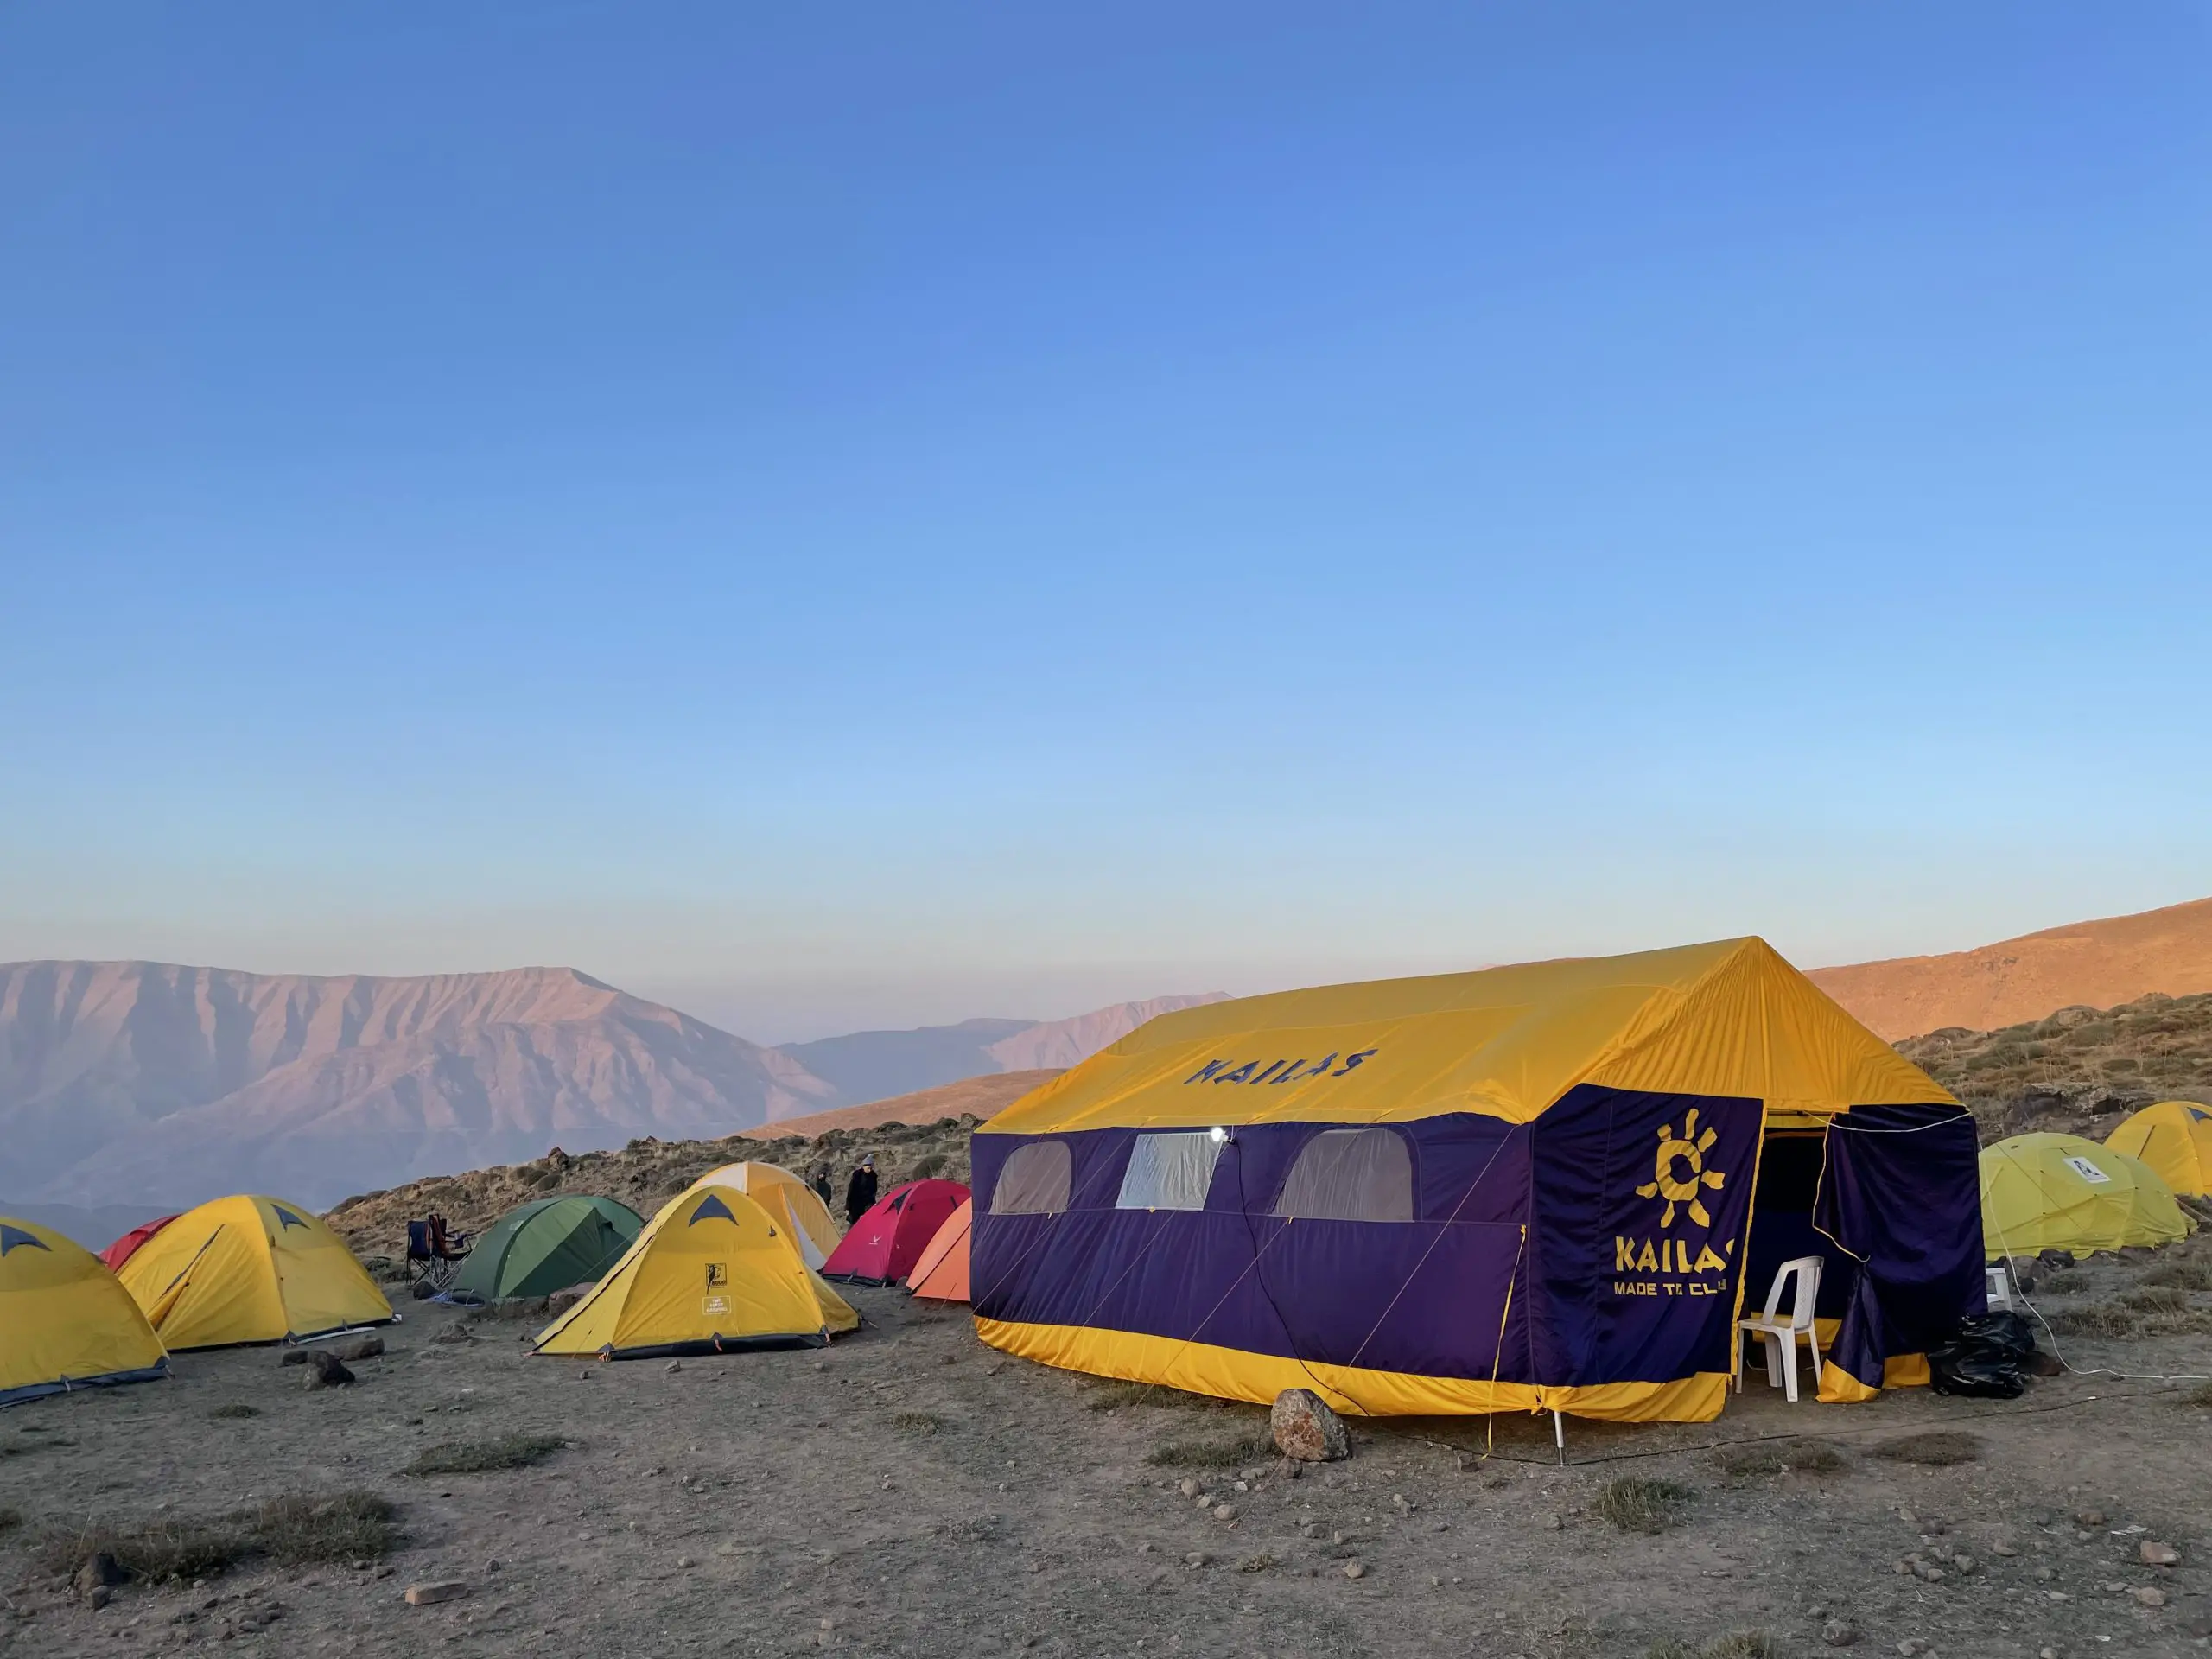 IMG 20210919 124054 434 scaled - Mount Damavand South Face Trekking Tour